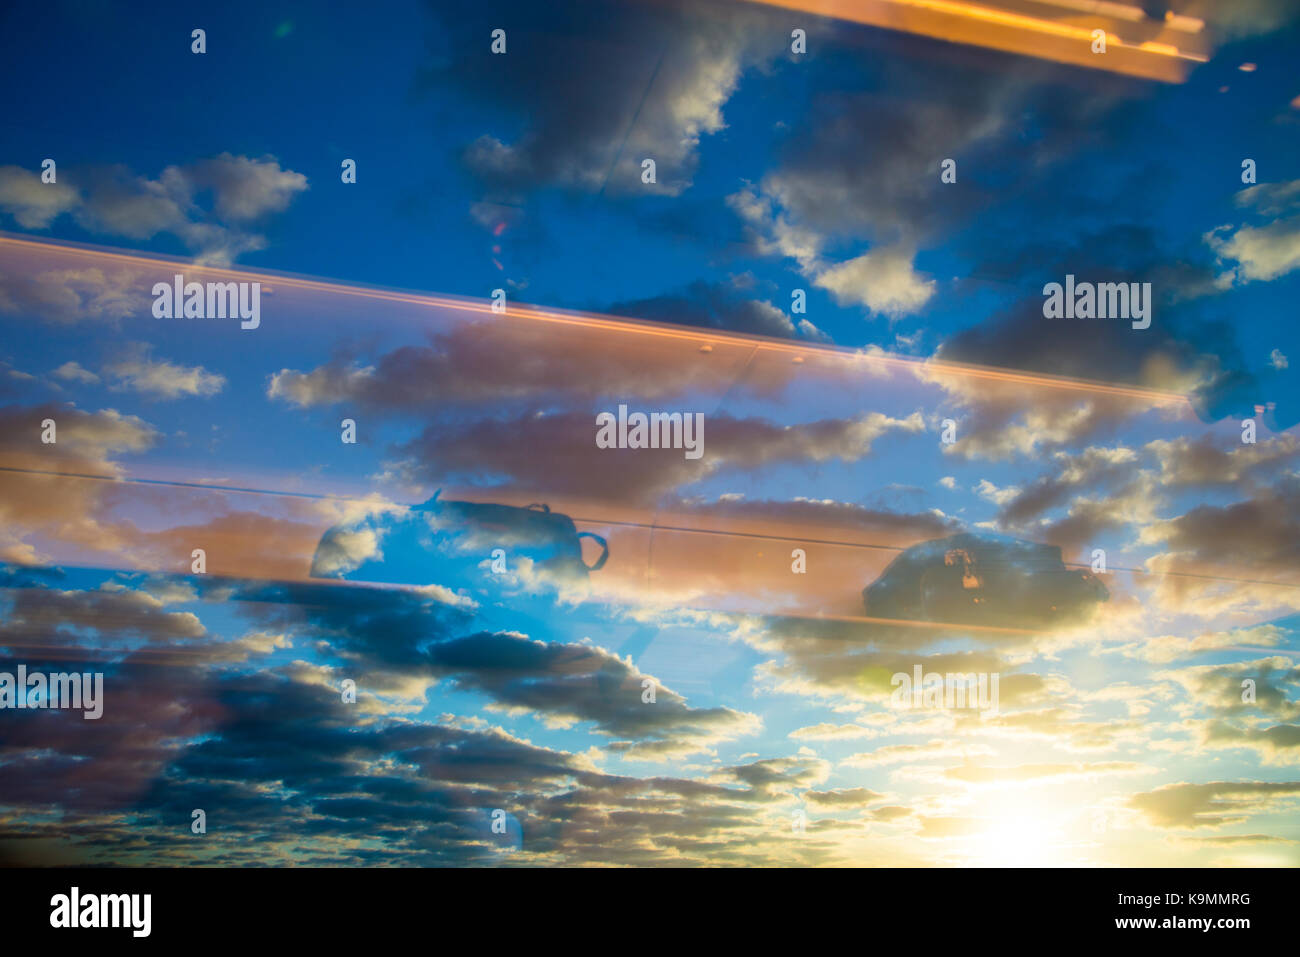 Sunrise sky viewed through a window. Stock Photo